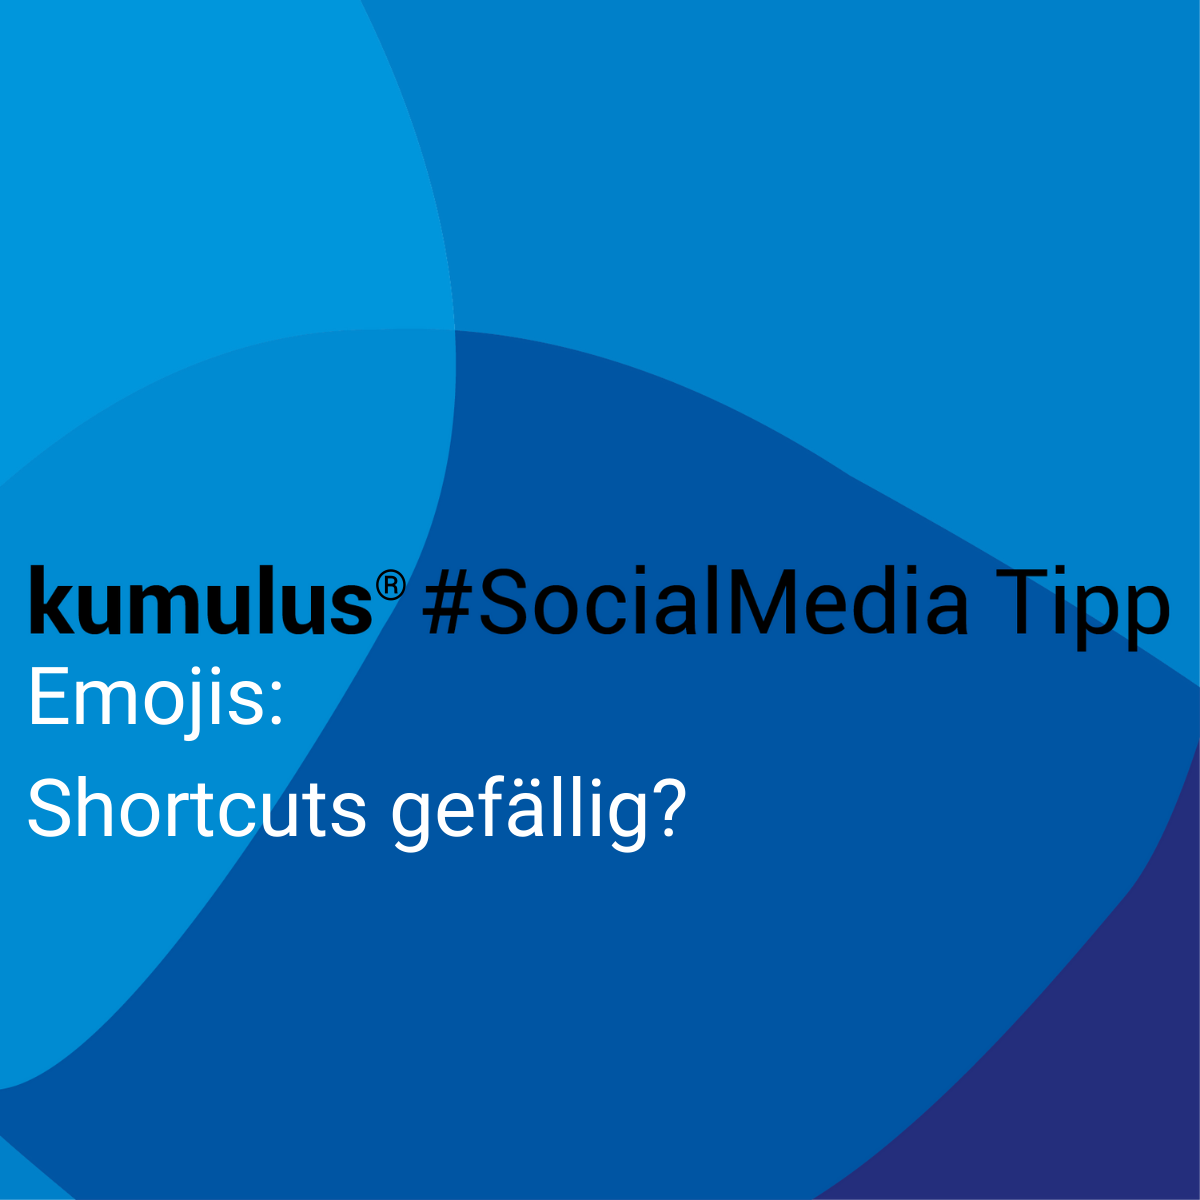 Emoji Shortcut für Windows und iOS – kumulus Social Media Tipp